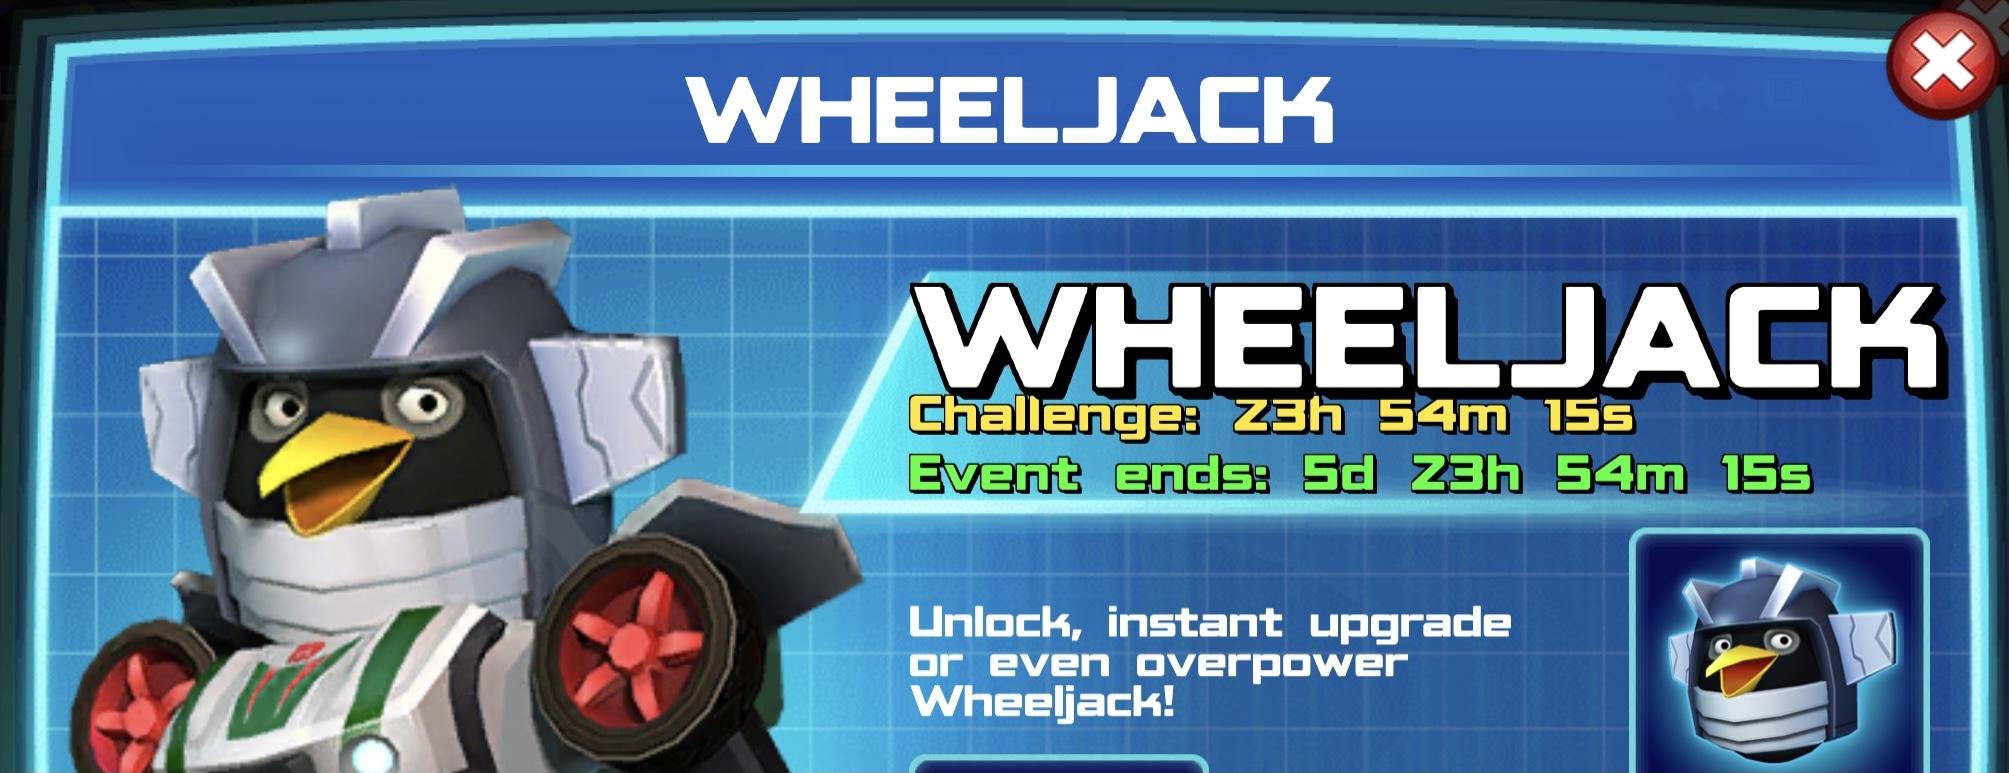 The event banner for Wheeljack